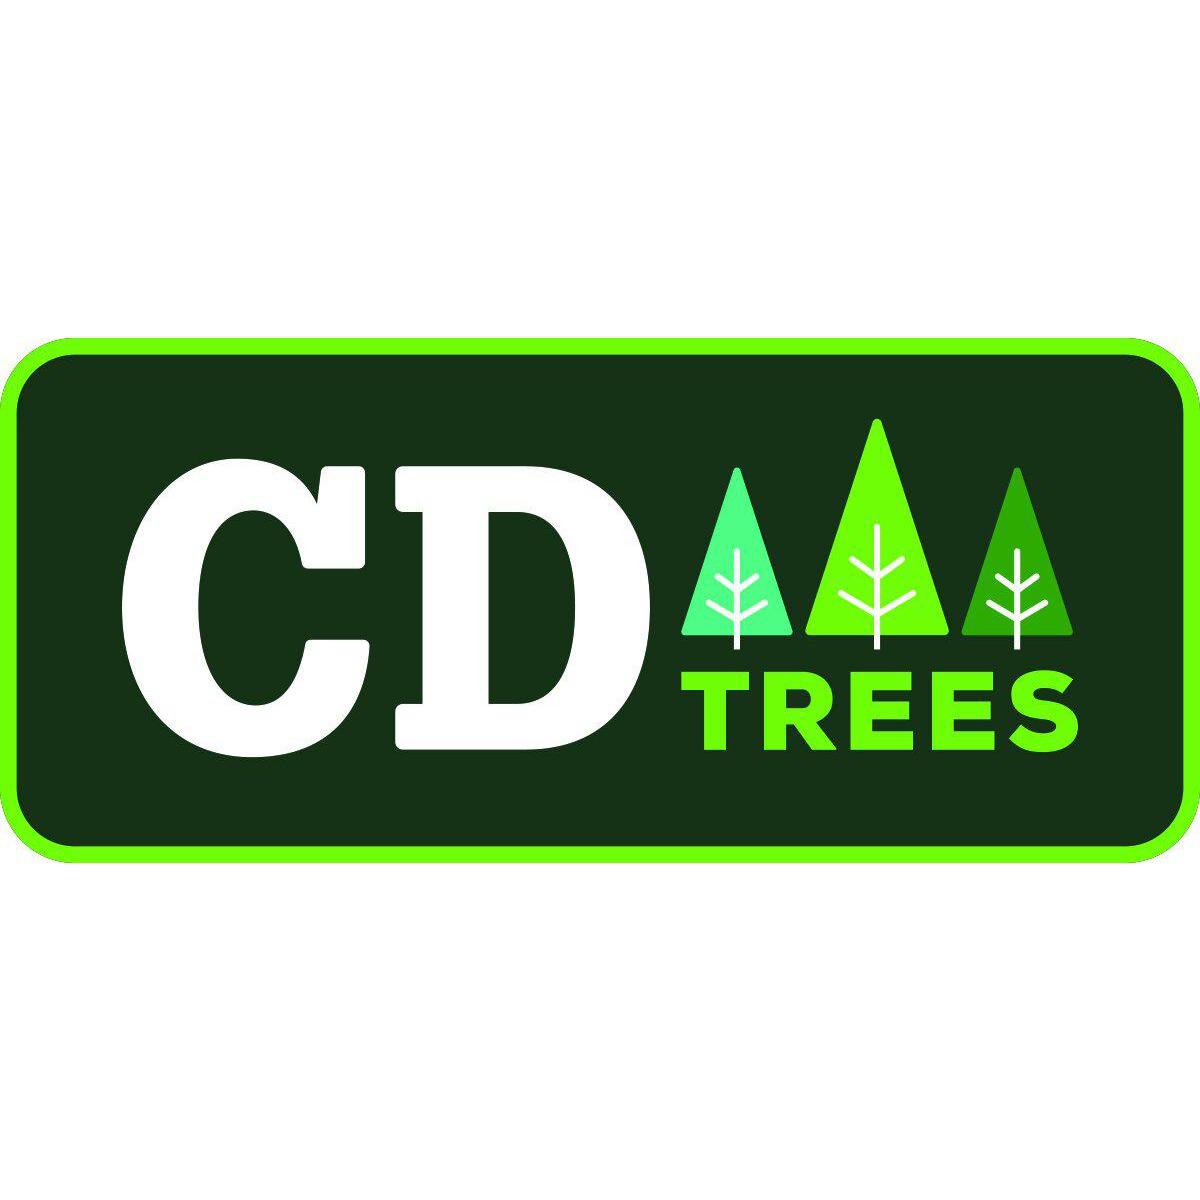 CD Trees Steinbach (204)326-6222